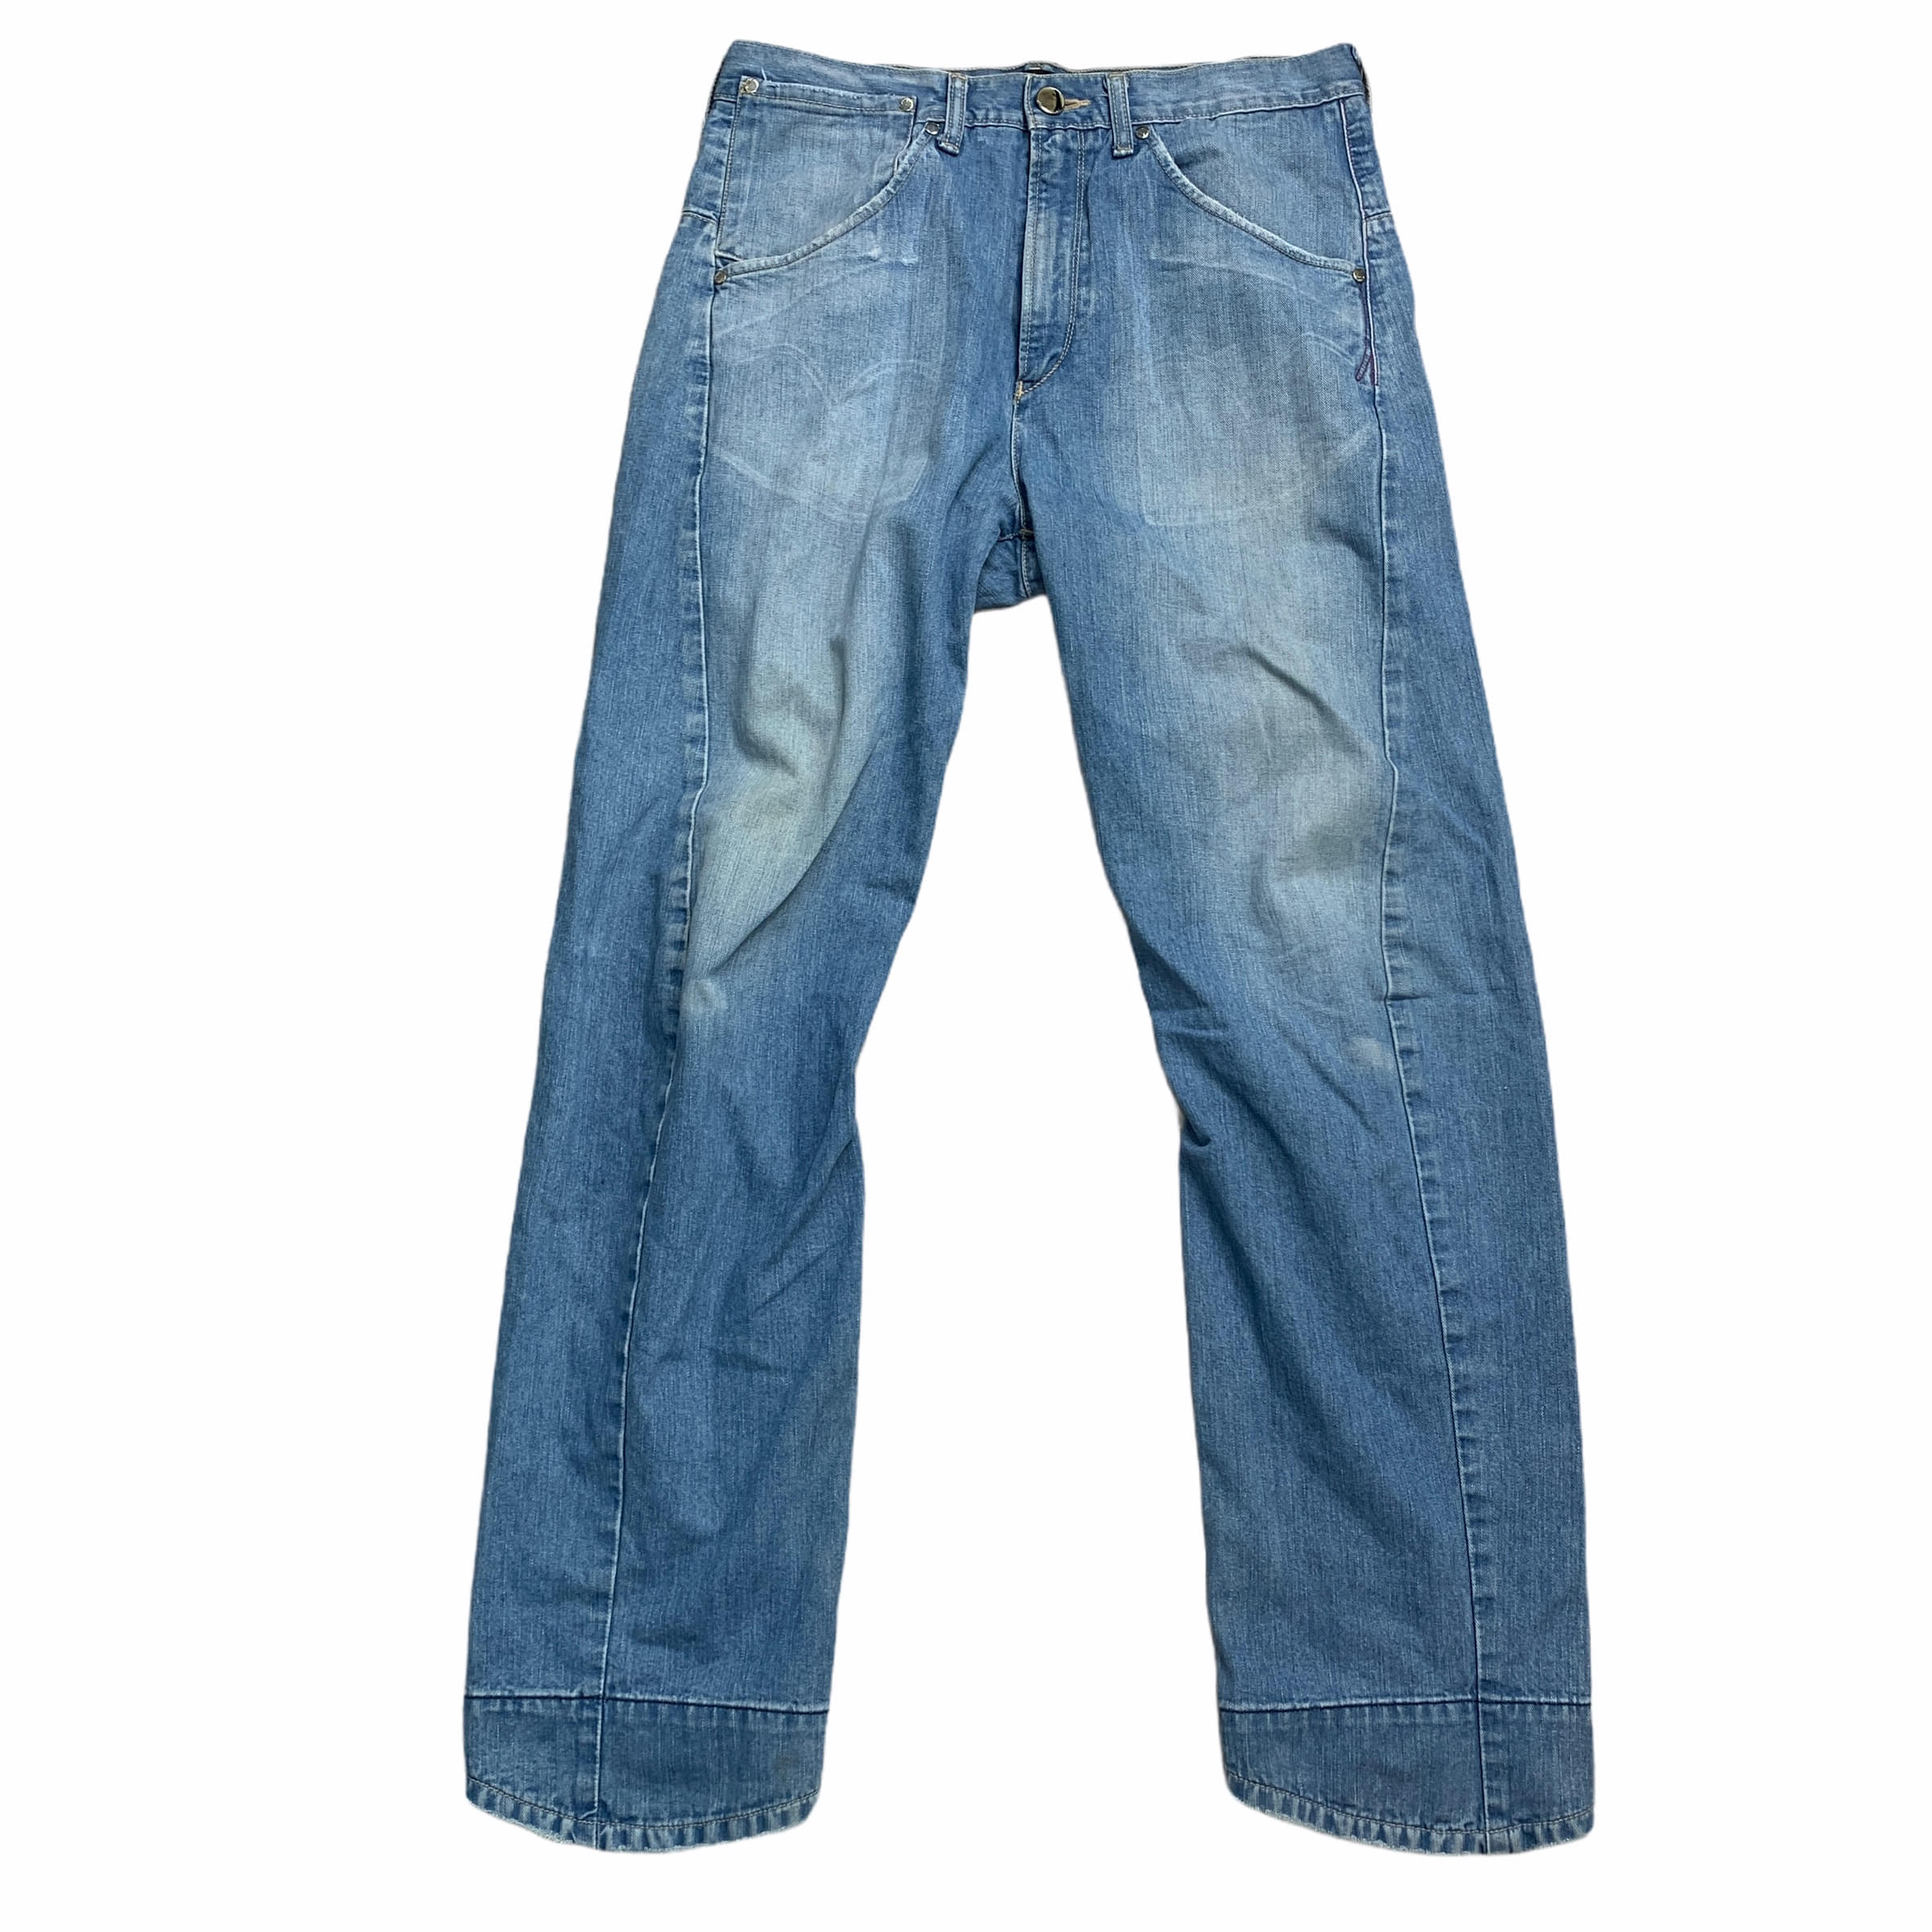 [Levis] (Vintage) Engineered Jean - Size 32/32